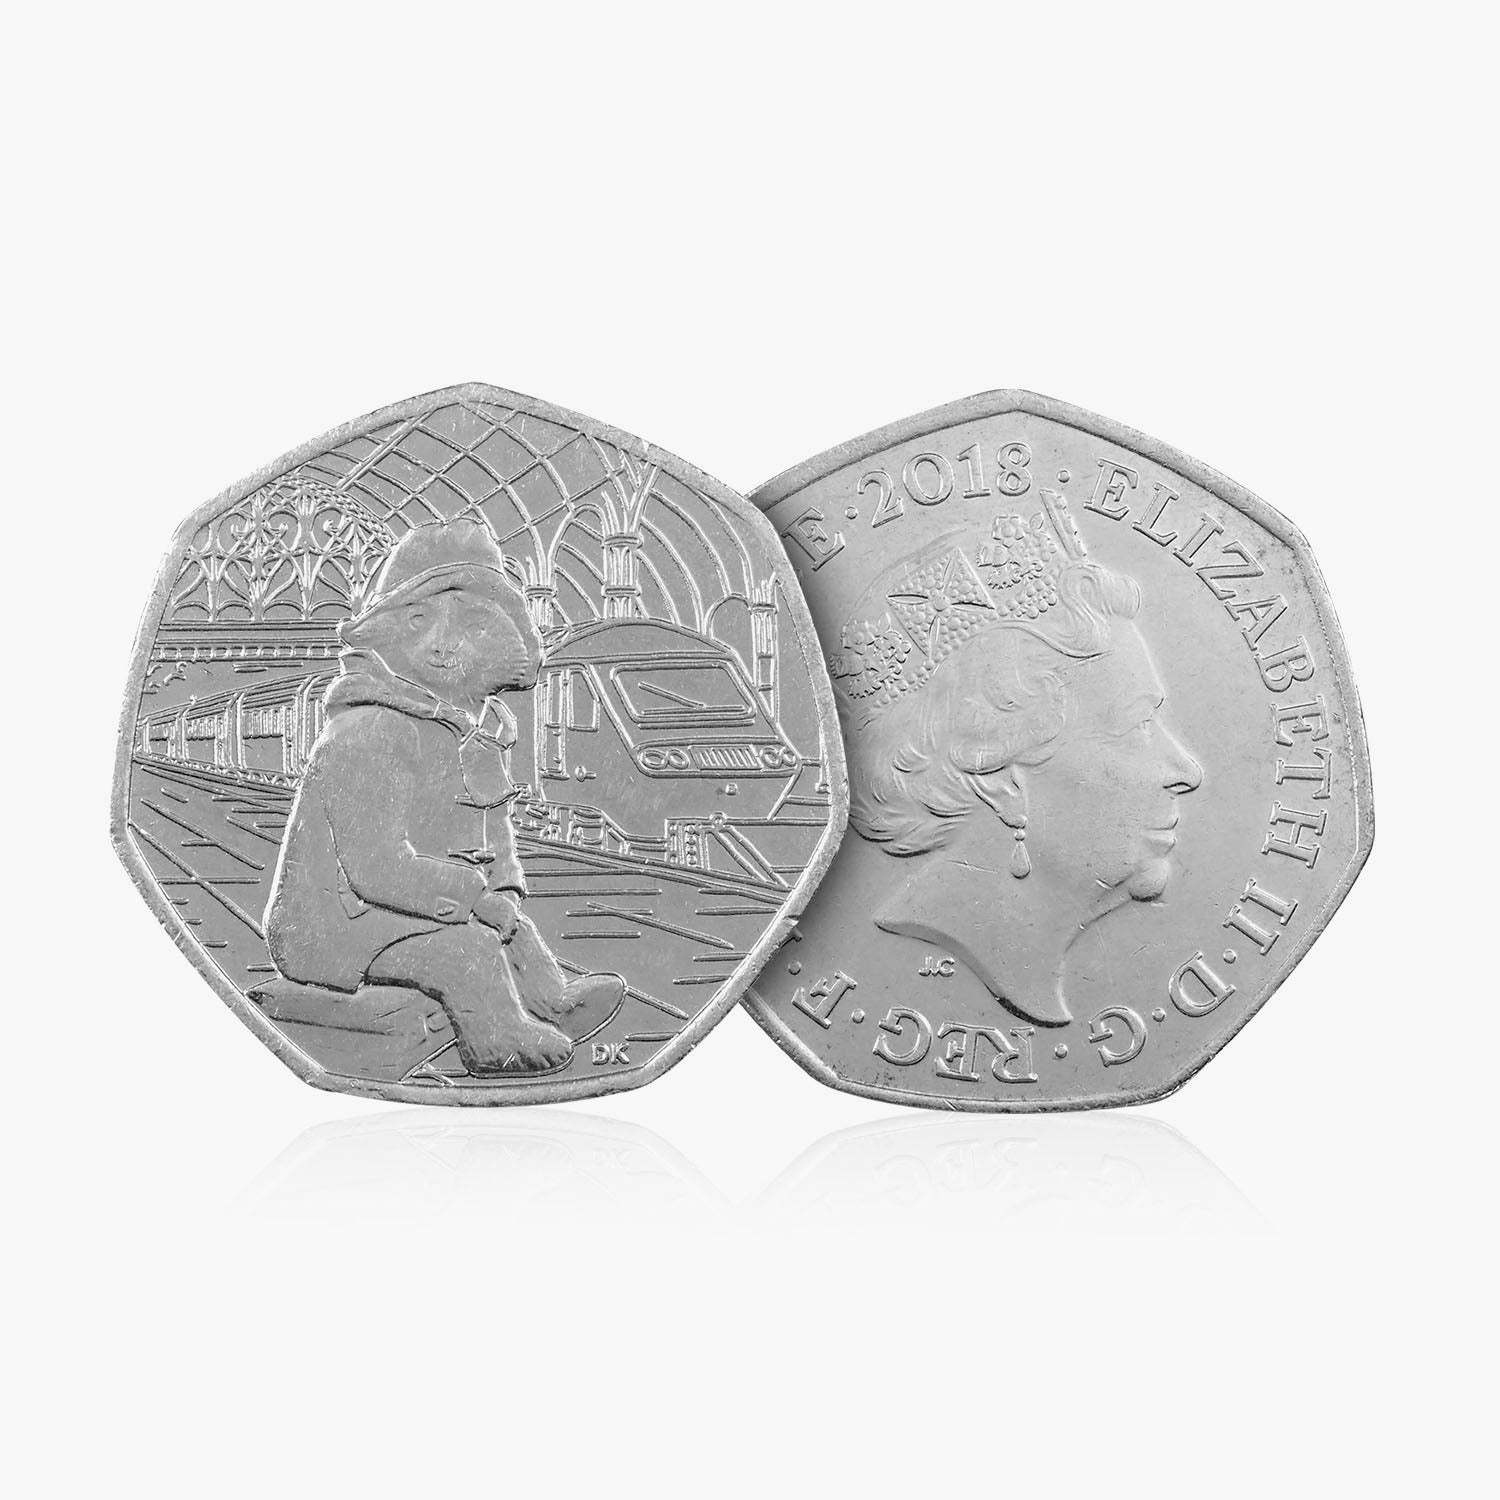 2018 Circulated Paddington Bear series - Paddington at the Station 50p coin